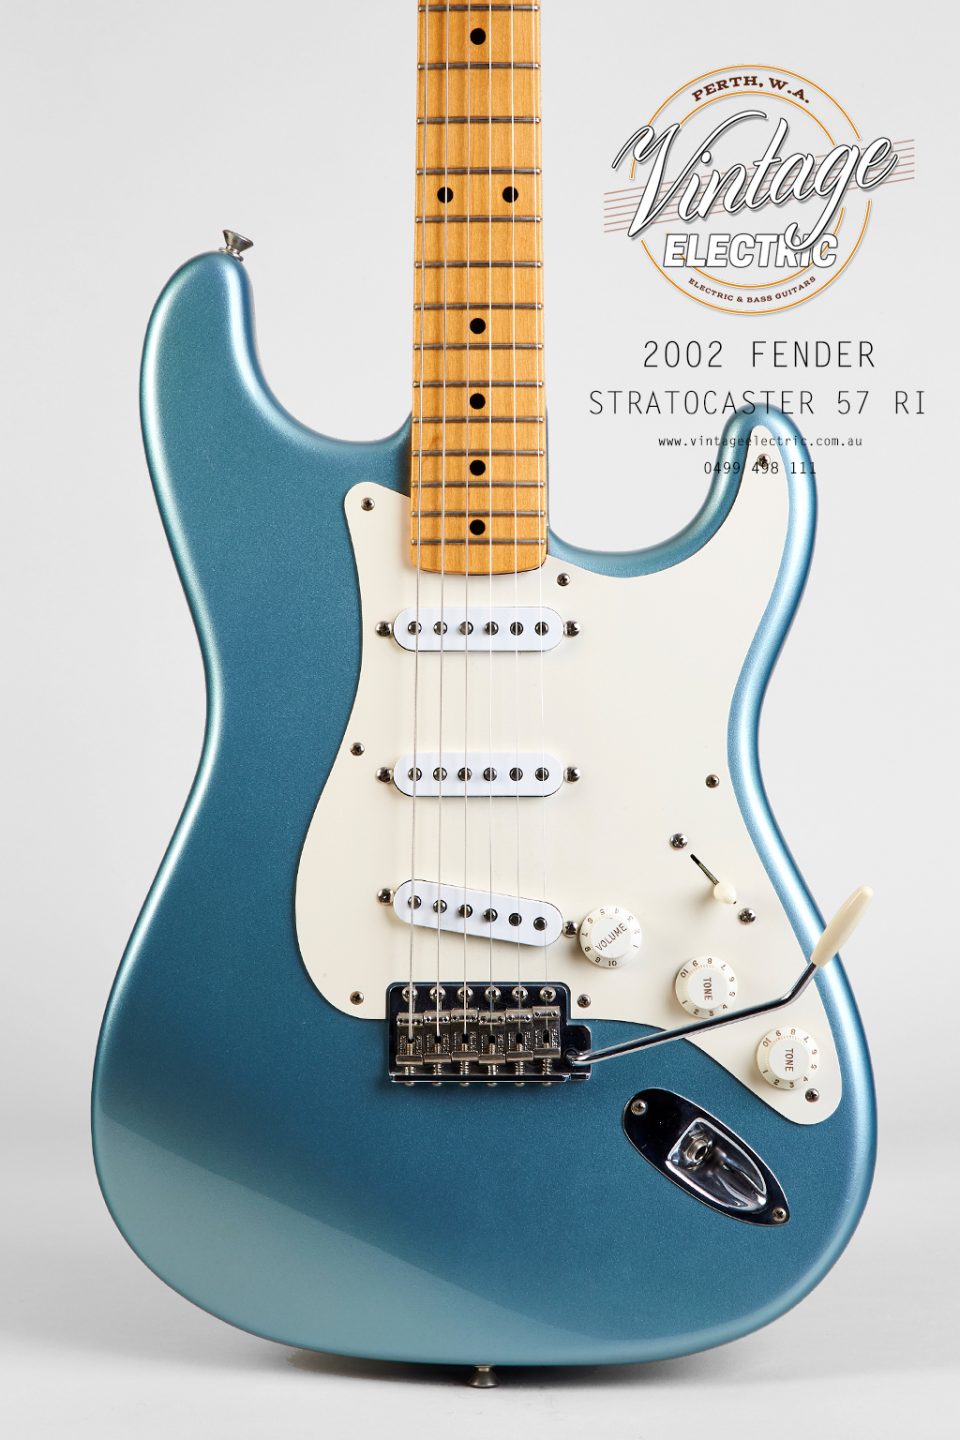 2002 Fender Stratocaster Ice Blue Metallic Body